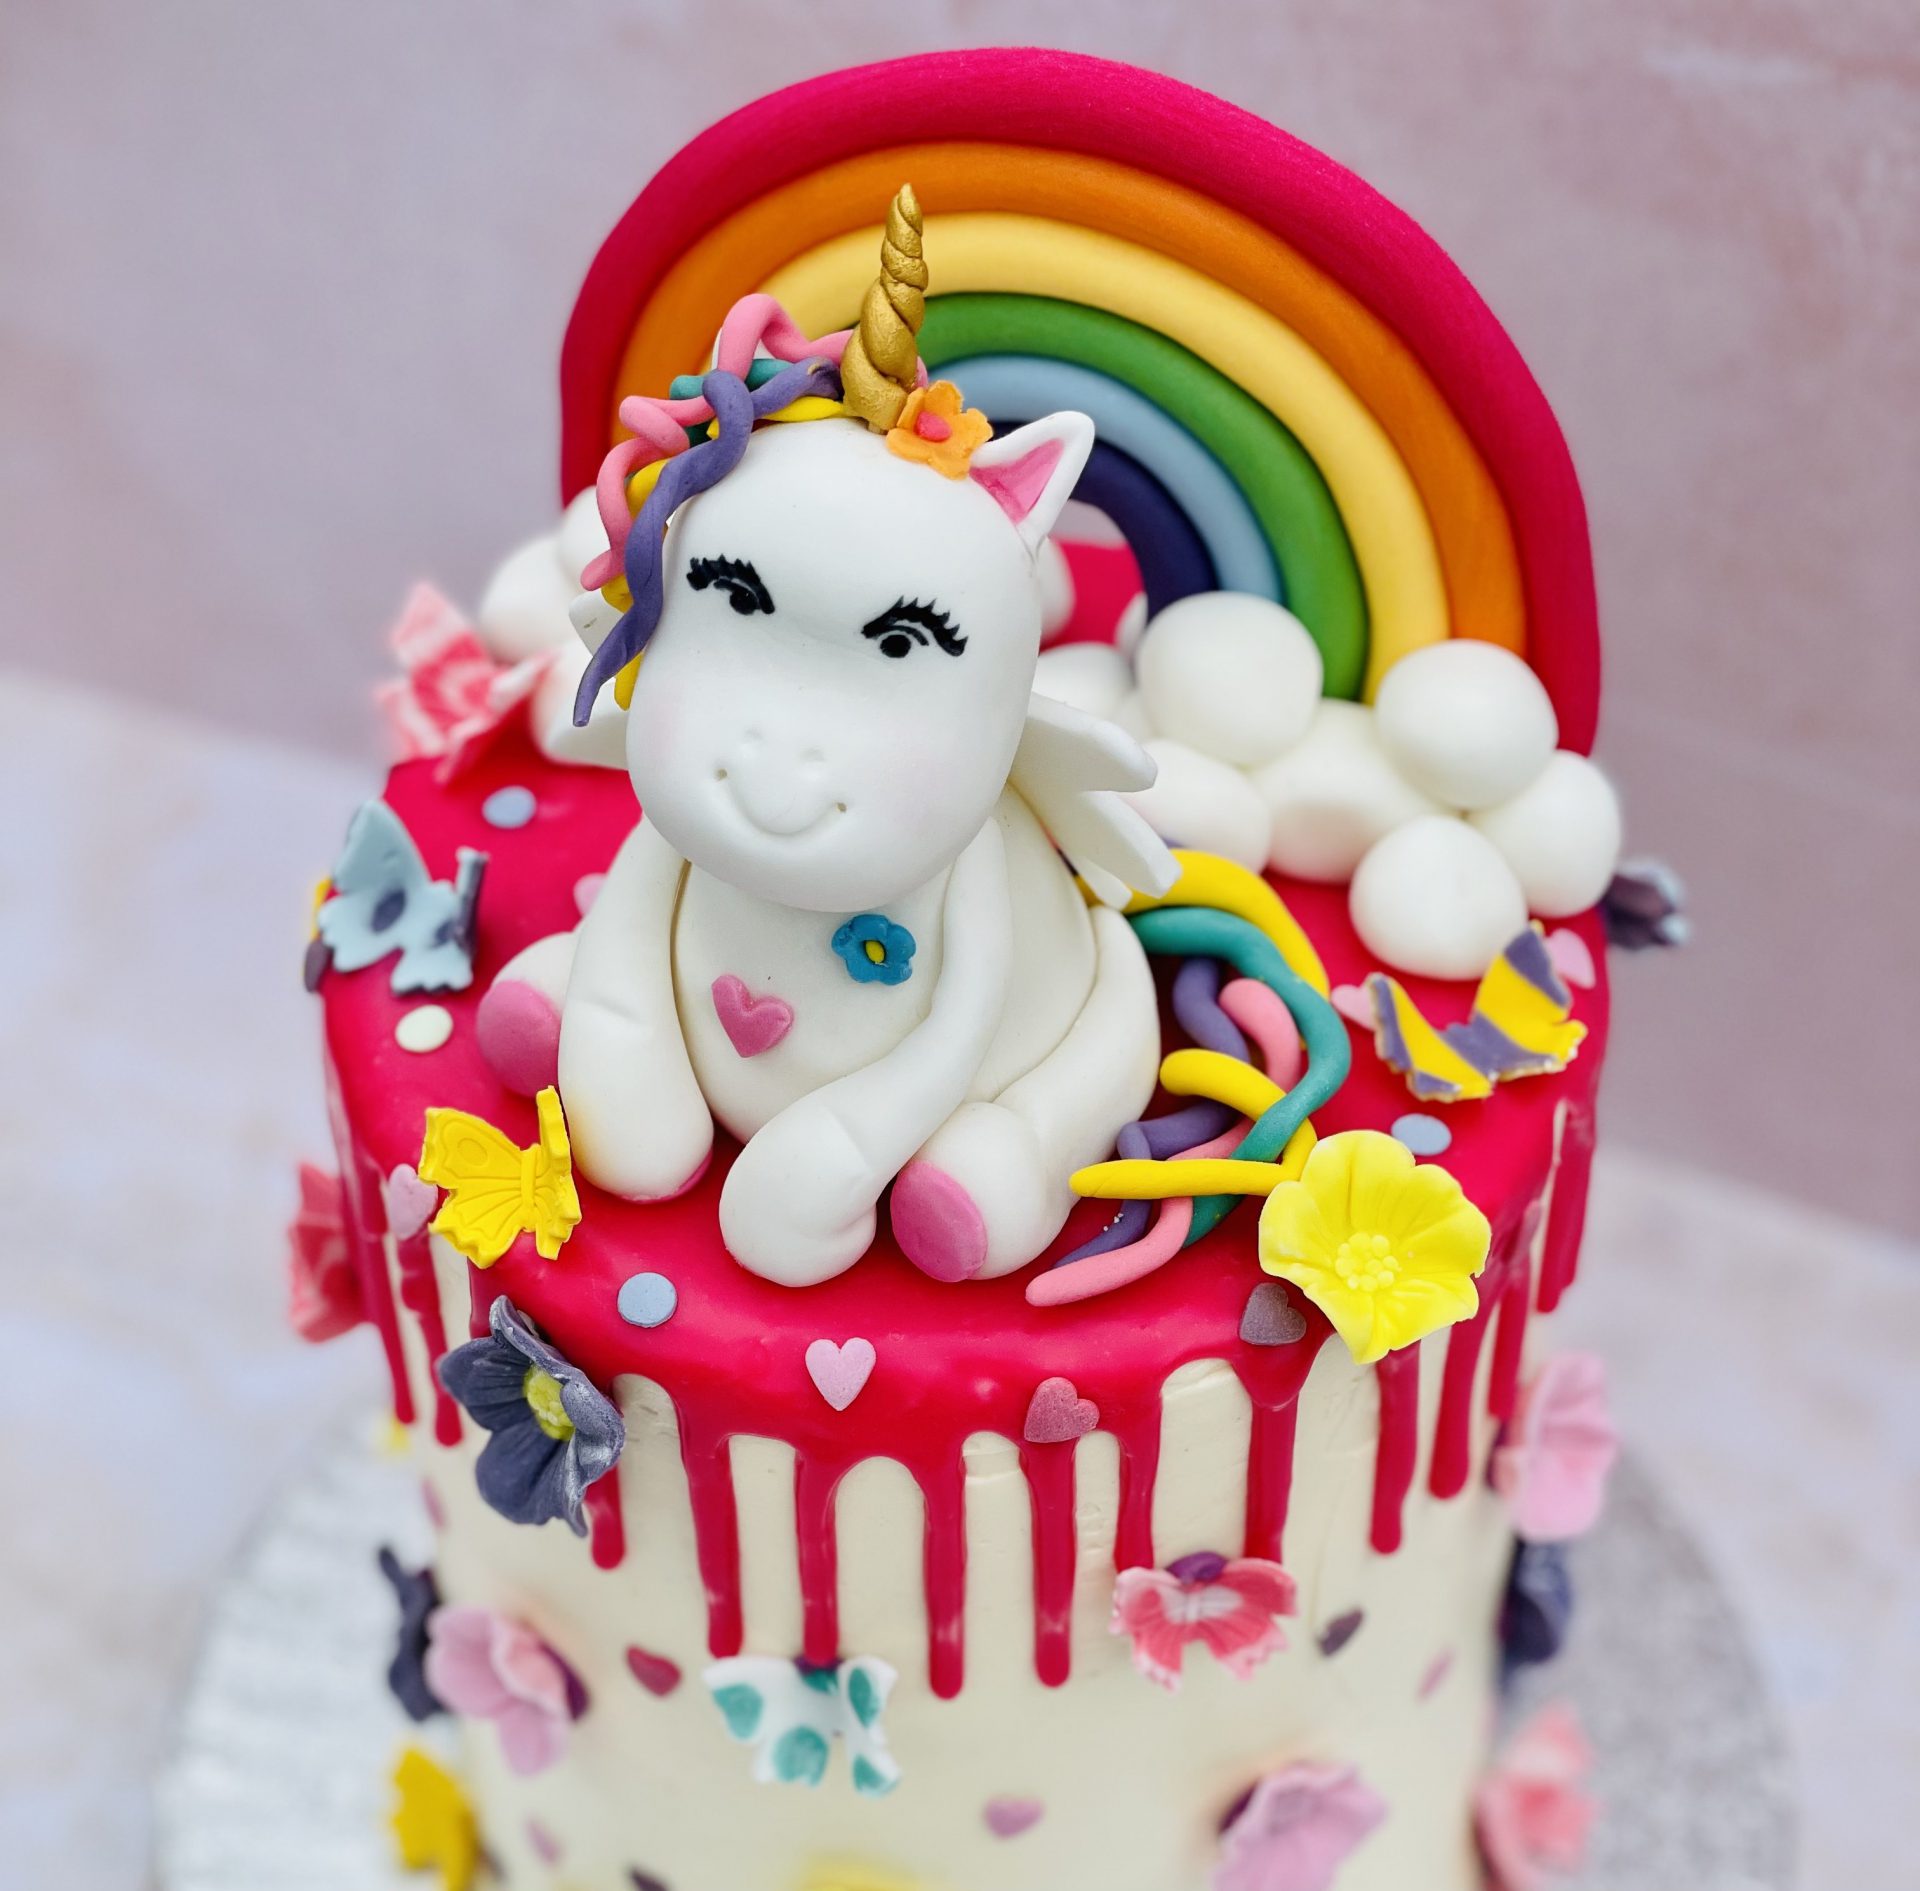 Premium Photo | Cute unicorn cake for birthday, holiday decoration